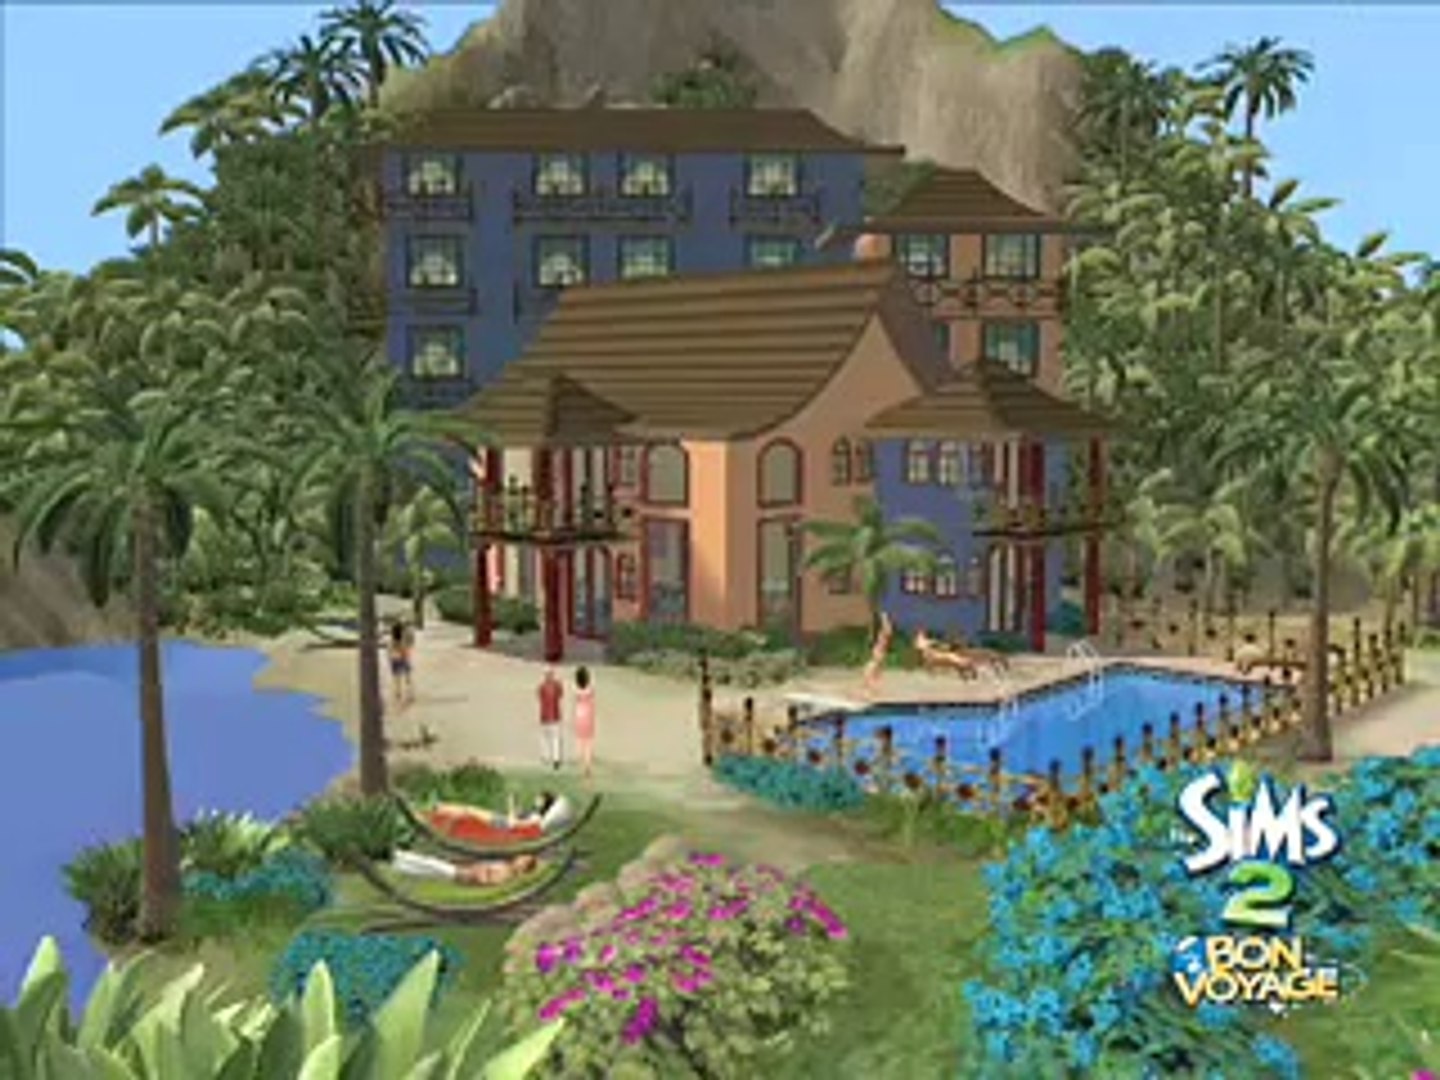 Les Sims 2 : Bon Voyage - Trailer du jeu - Vidéo Dailymotion